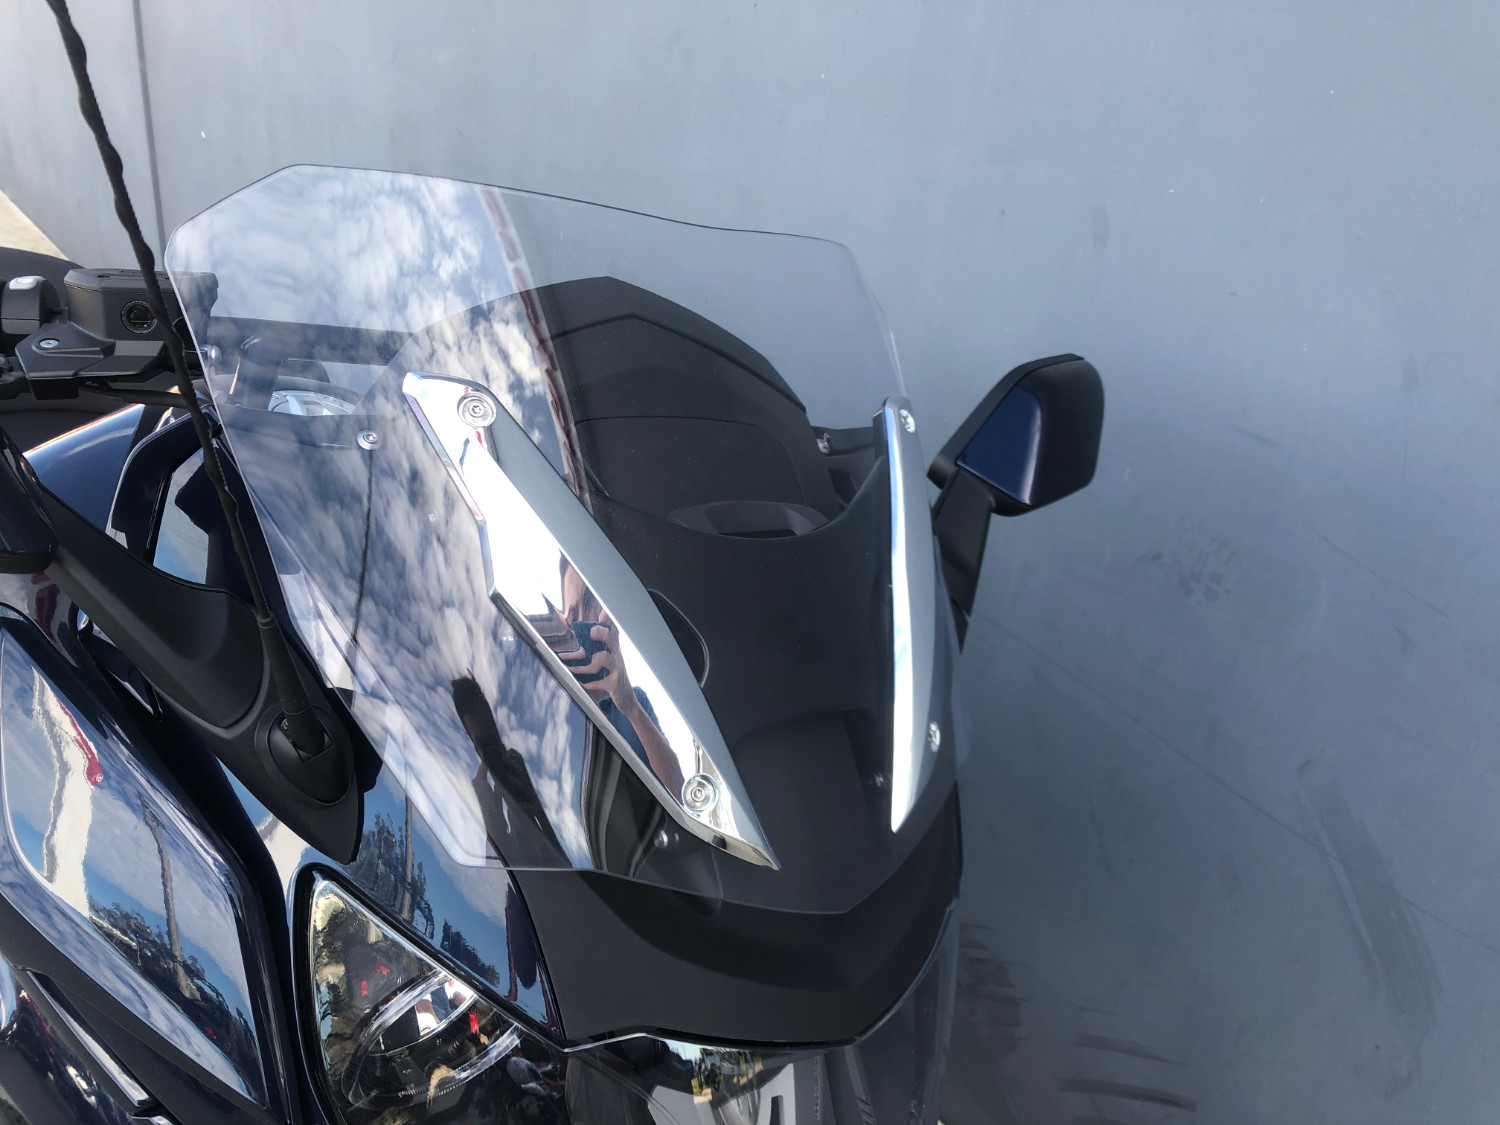 2019 BMW K1600 B Deluxe Motorcycle Image 39